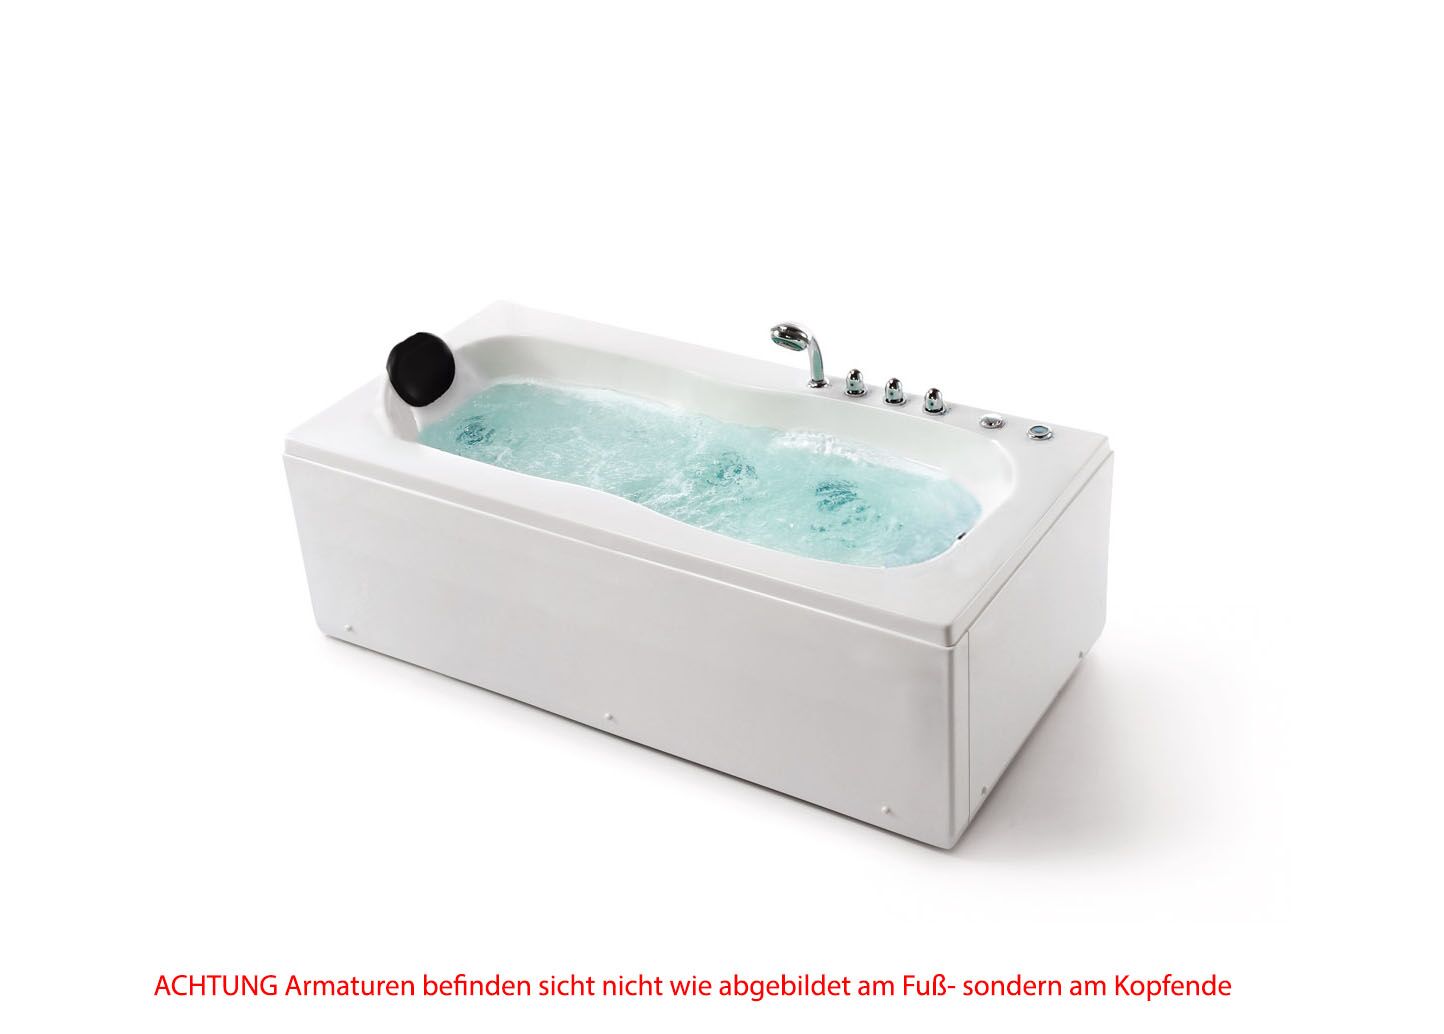 Whirlpool MILANO Comfort Spiegelverkehrt Rechts 1700x800x630mm